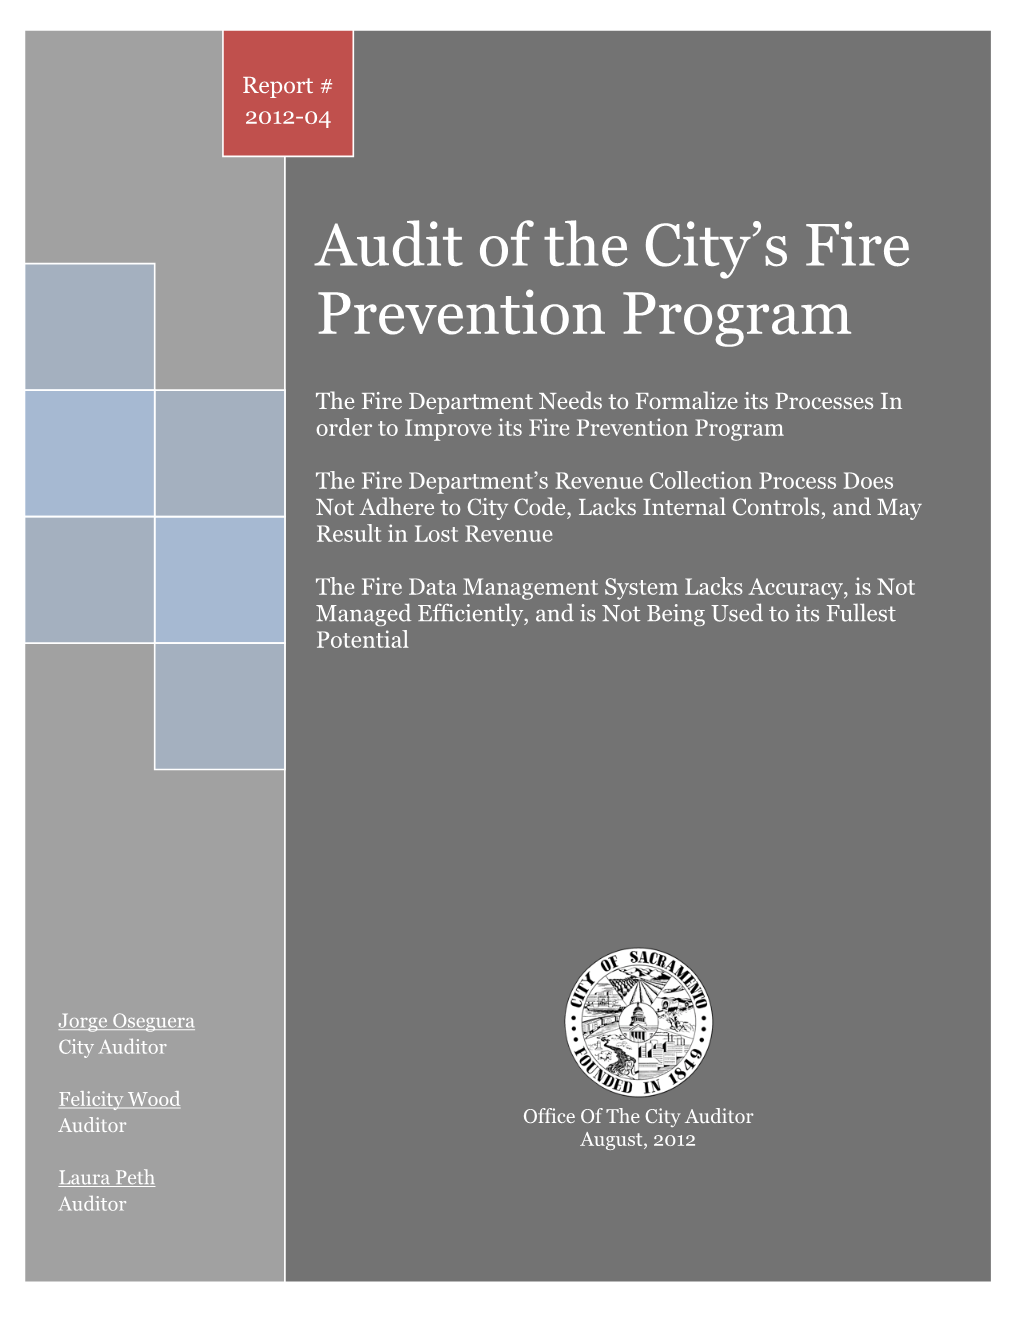 Audit of the City's Fire Prevention Program